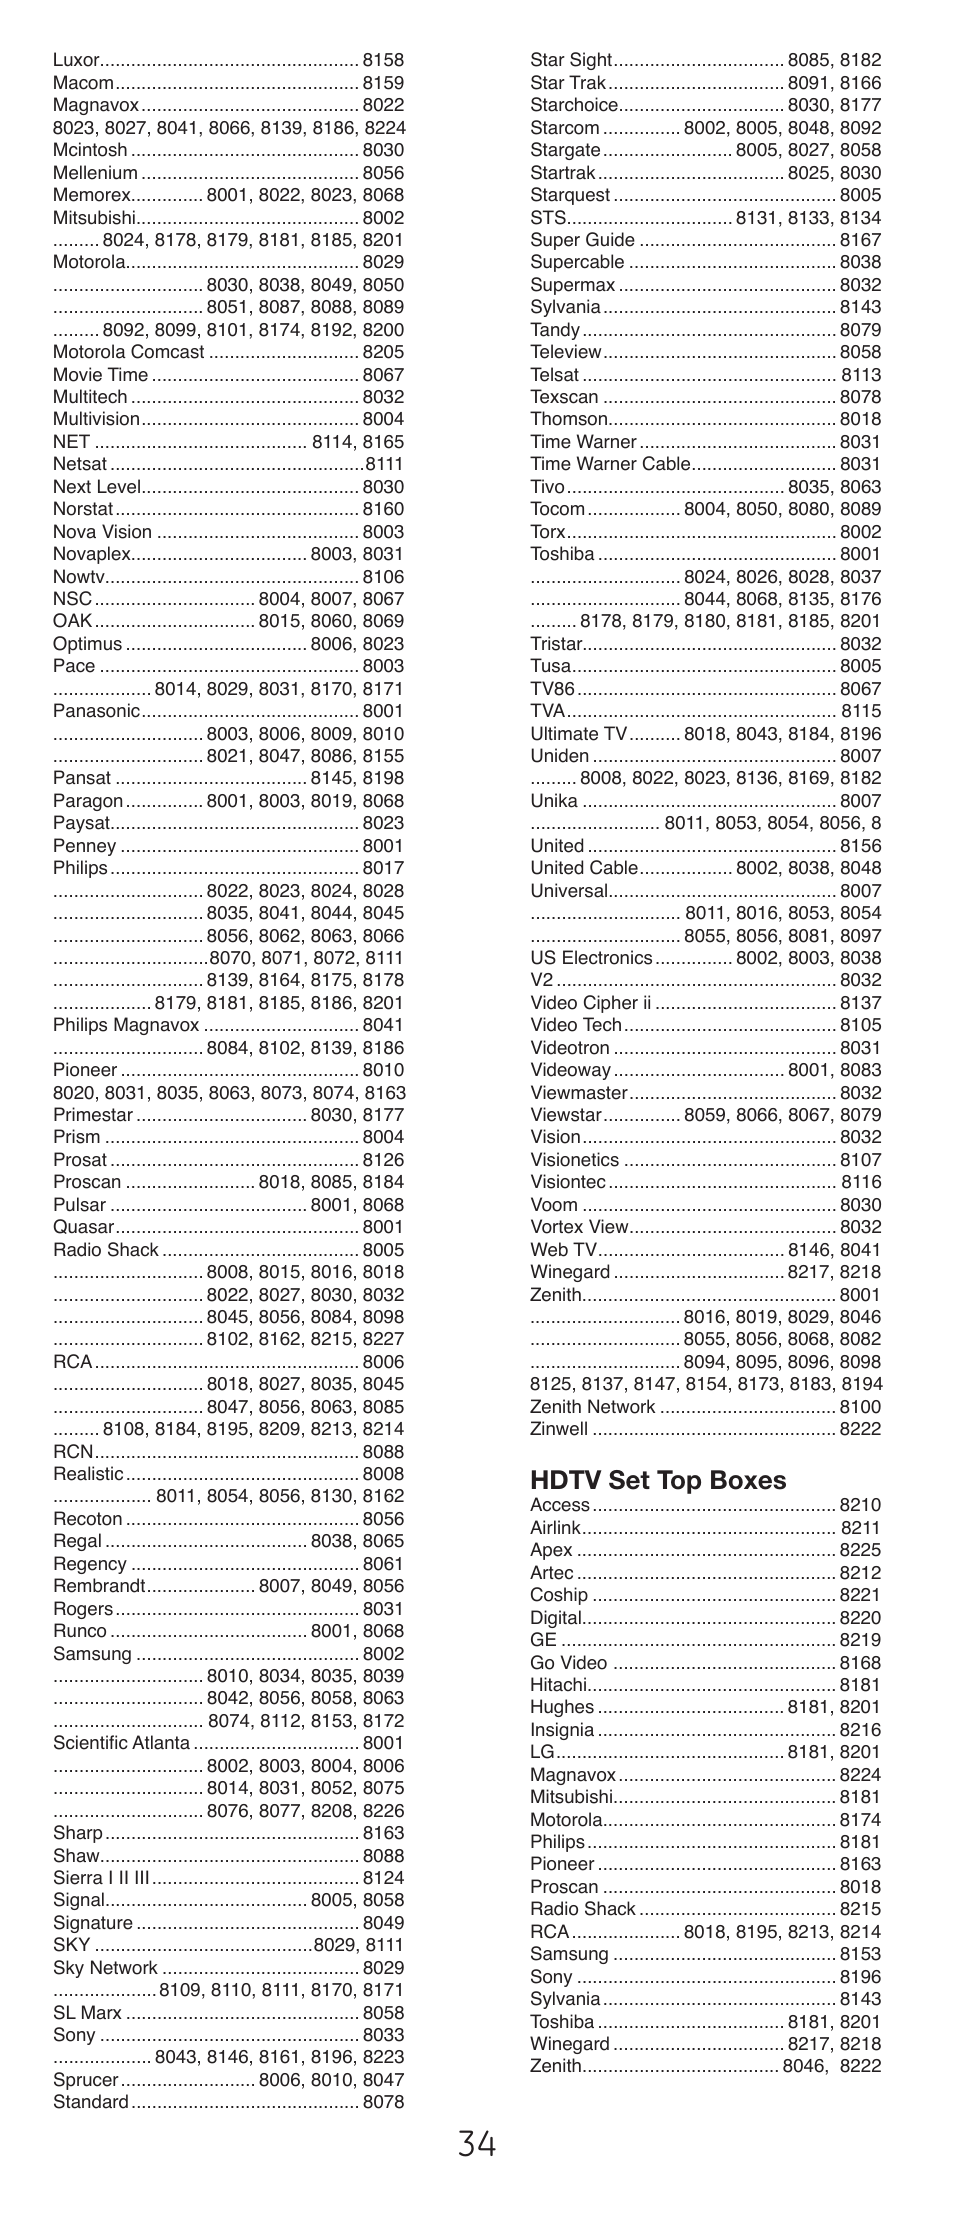 Hdtv set top boxes | GE 24927-v2 GE Universal Remote User Manual | Page